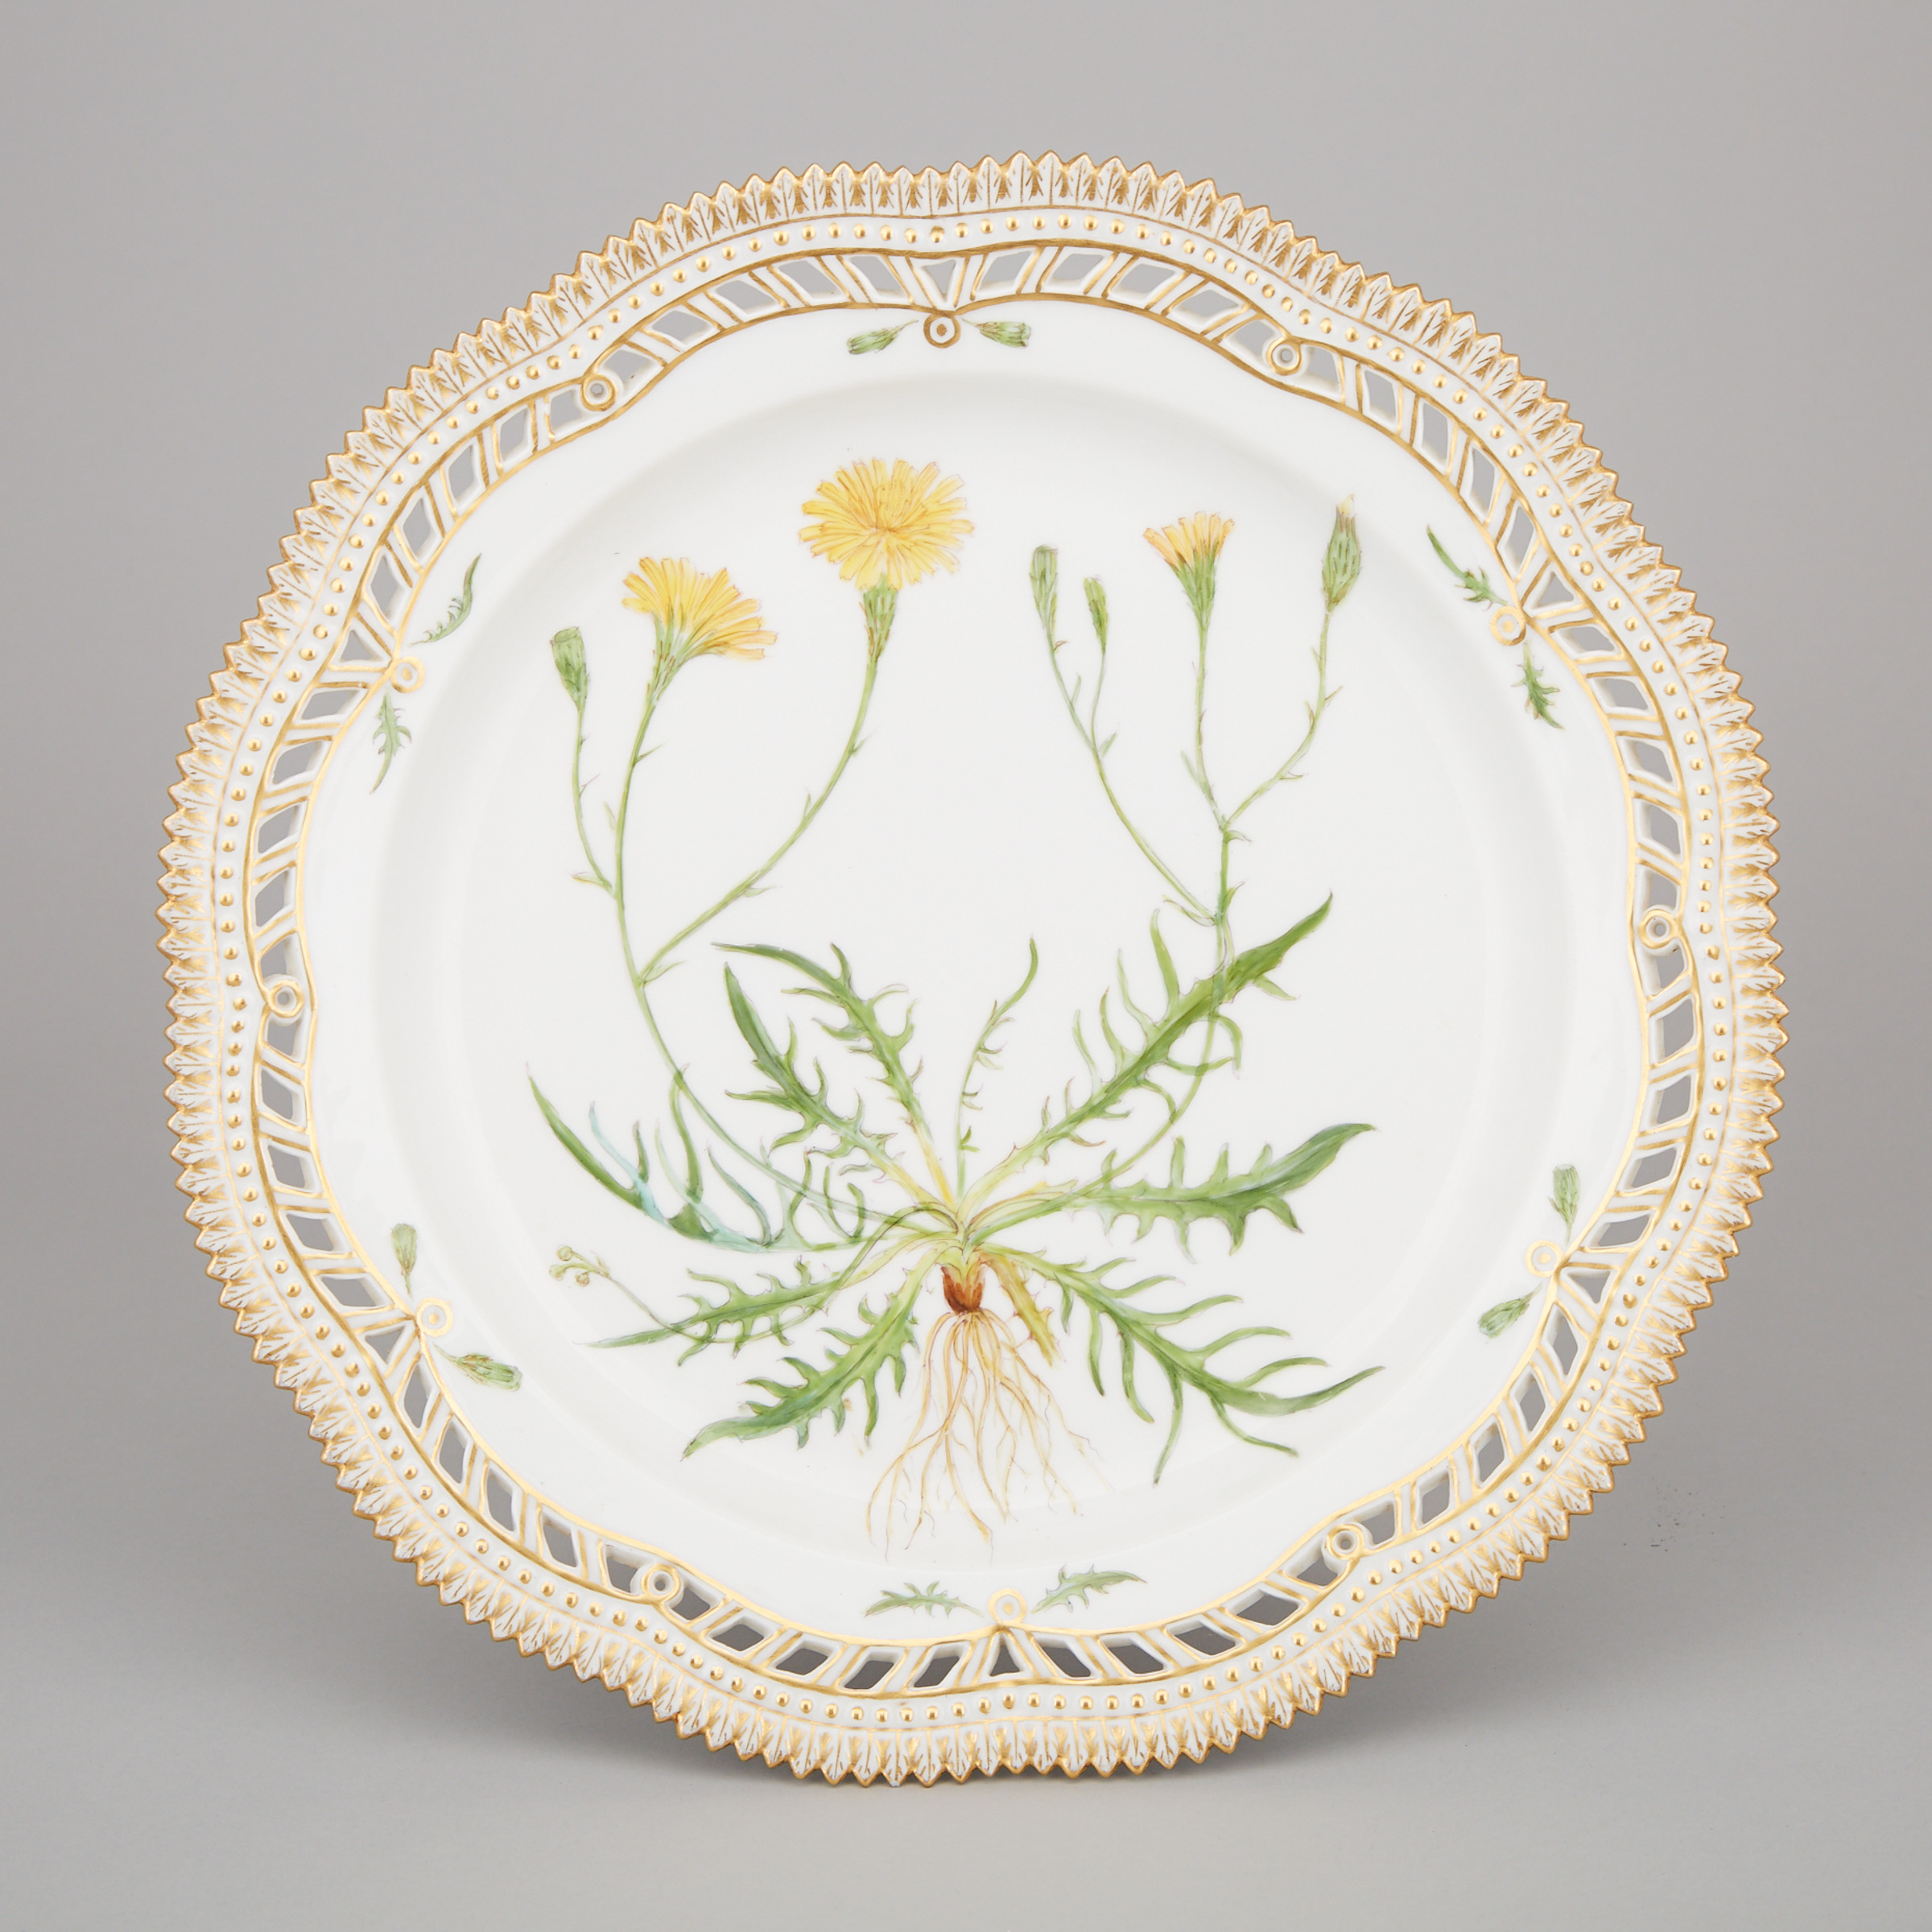 Royal Copenhagen ‘Flora Danica’ Reticulated Large Plate, 20th century